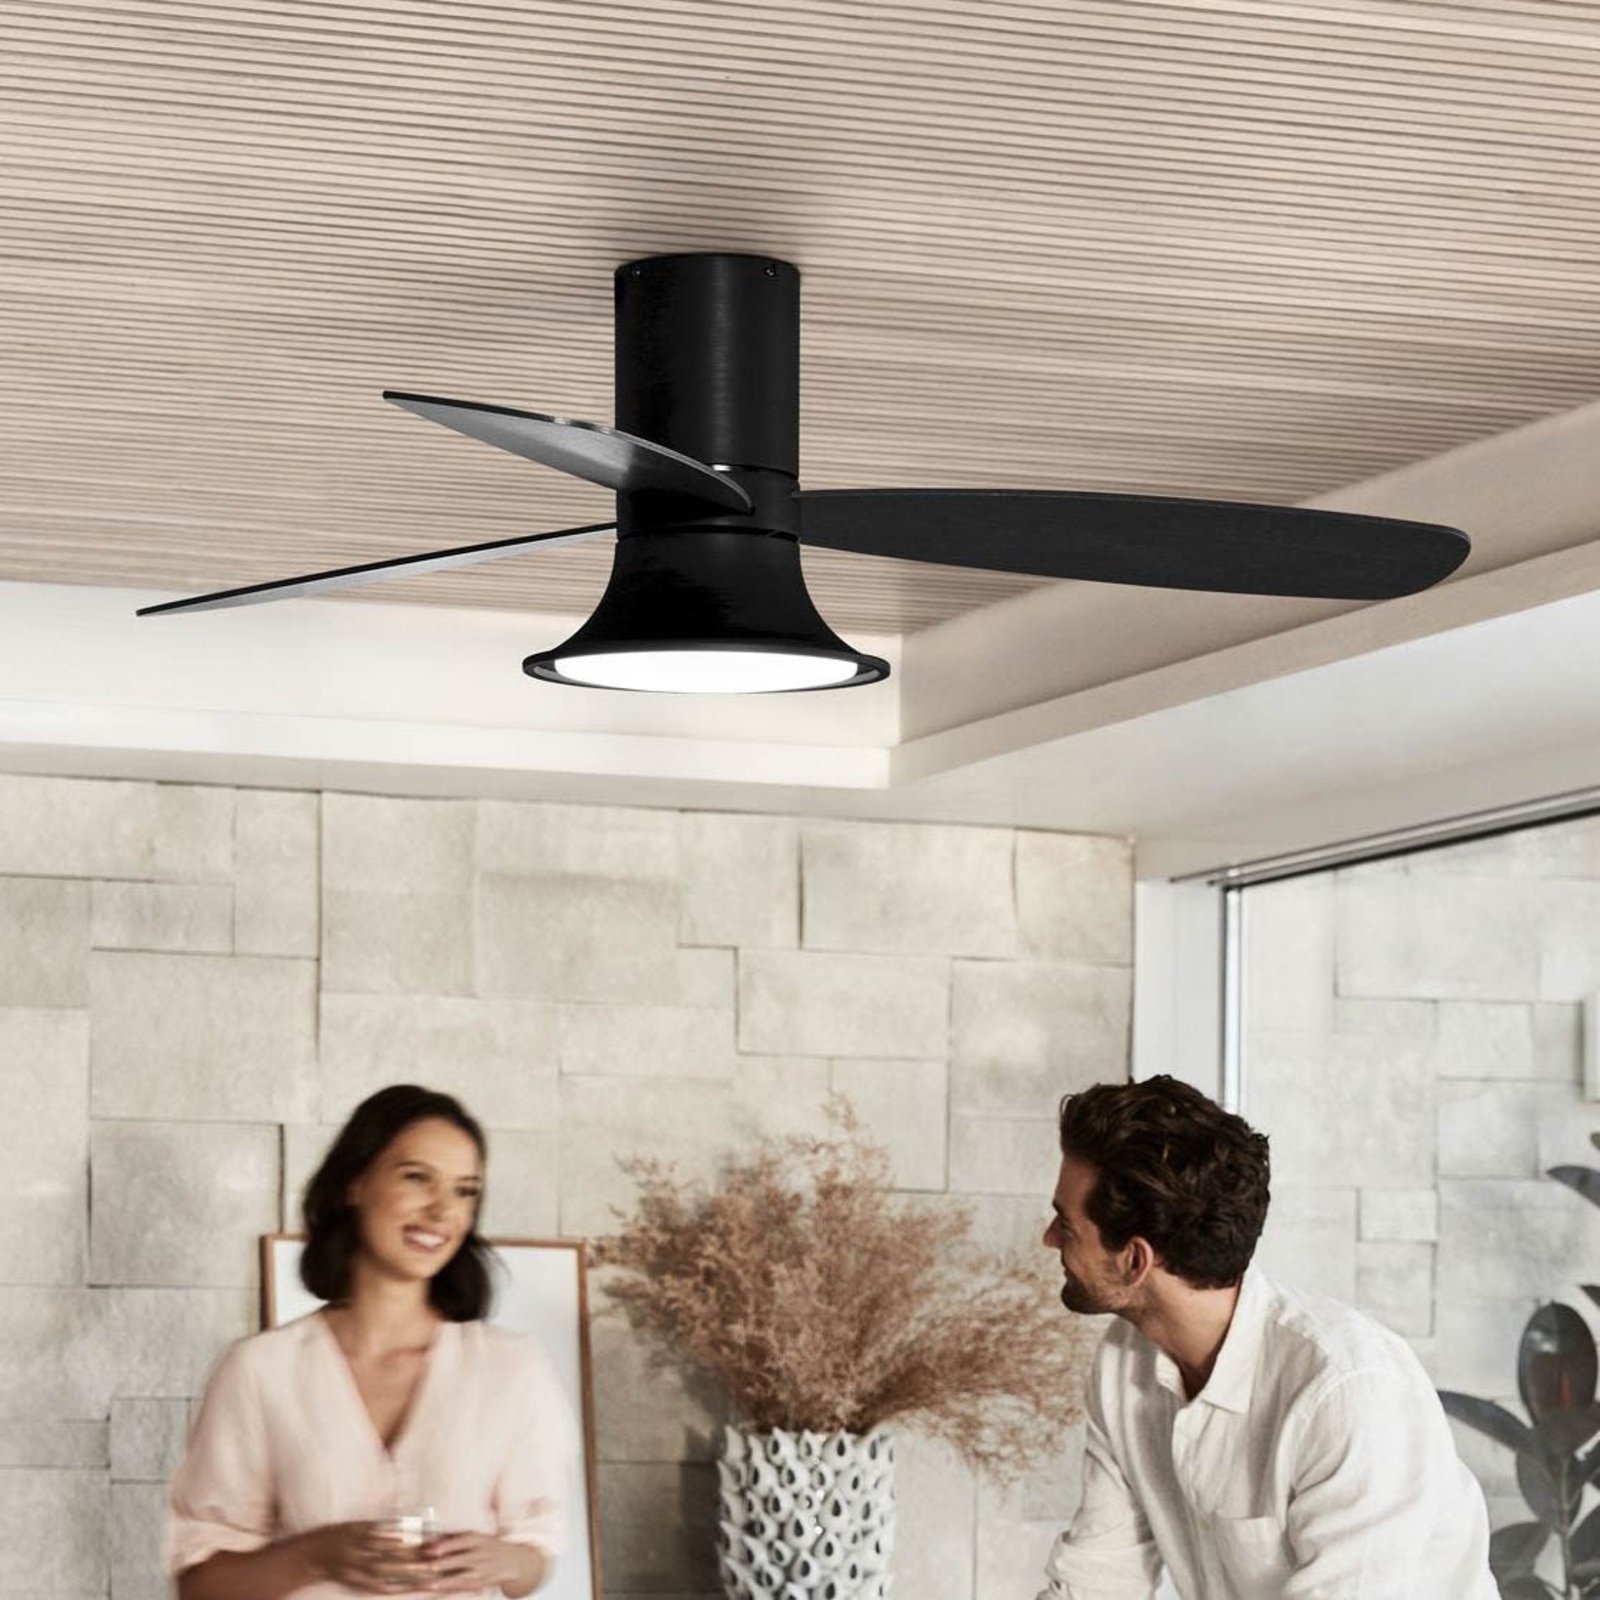 Flusso ceiling fan with LED light, black